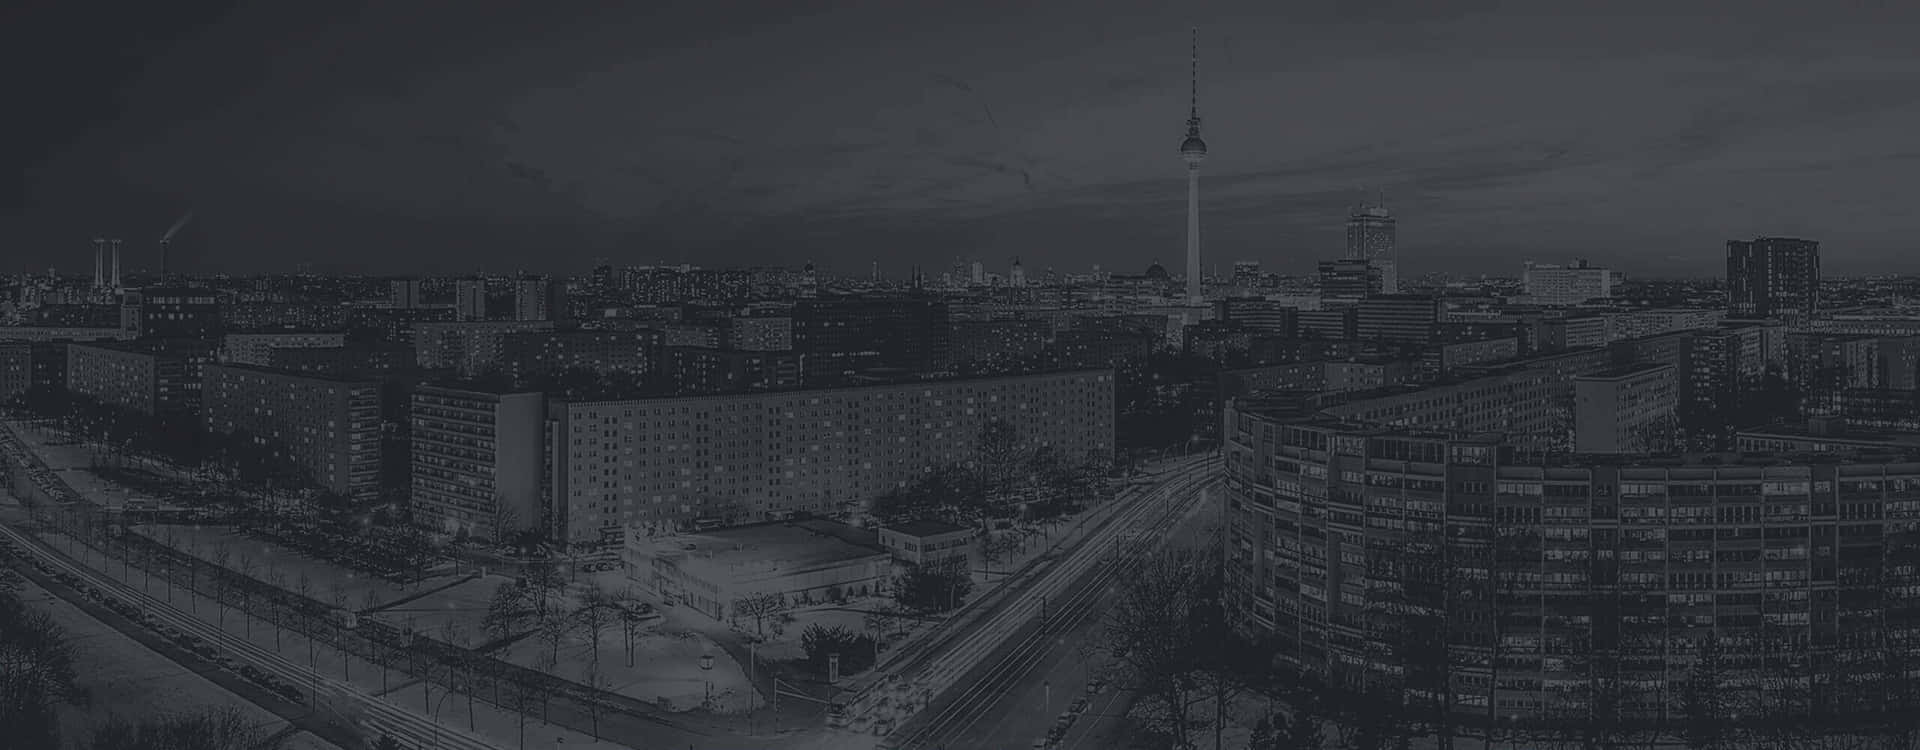 Nattens Berlin skyline med de fremhævede ord Berlin TV-tårn Wallpaper